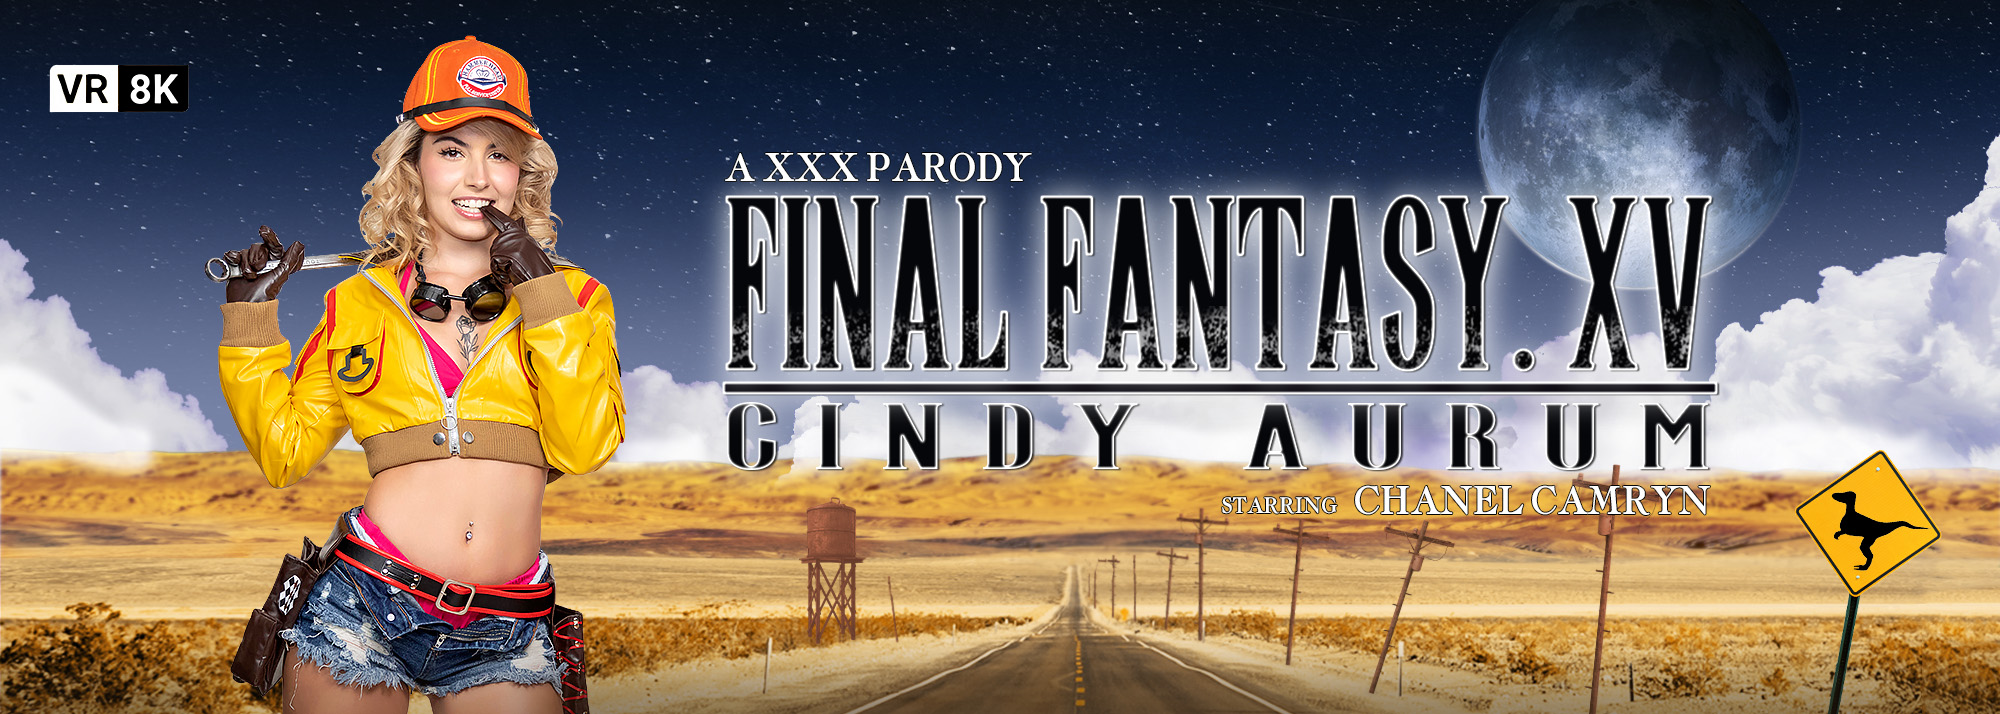 diann smith davis recommends Final Fantasy Xv Cindy Porn